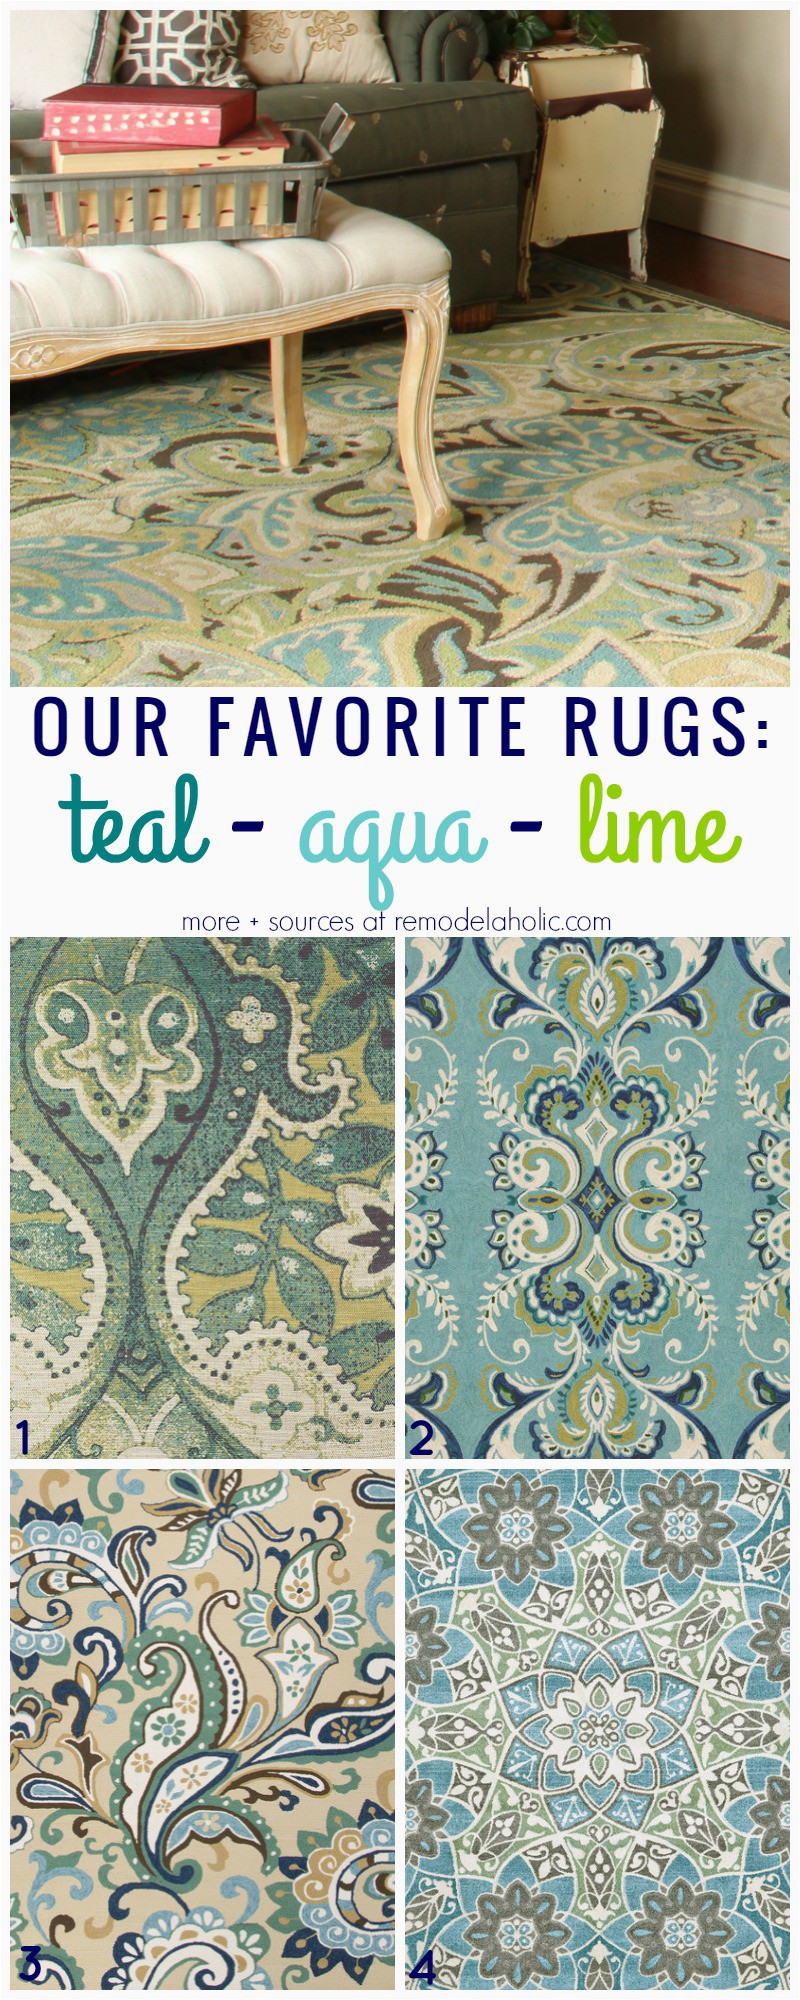 Favorite rugs teal aqua lime 1 4 Remodelaholic